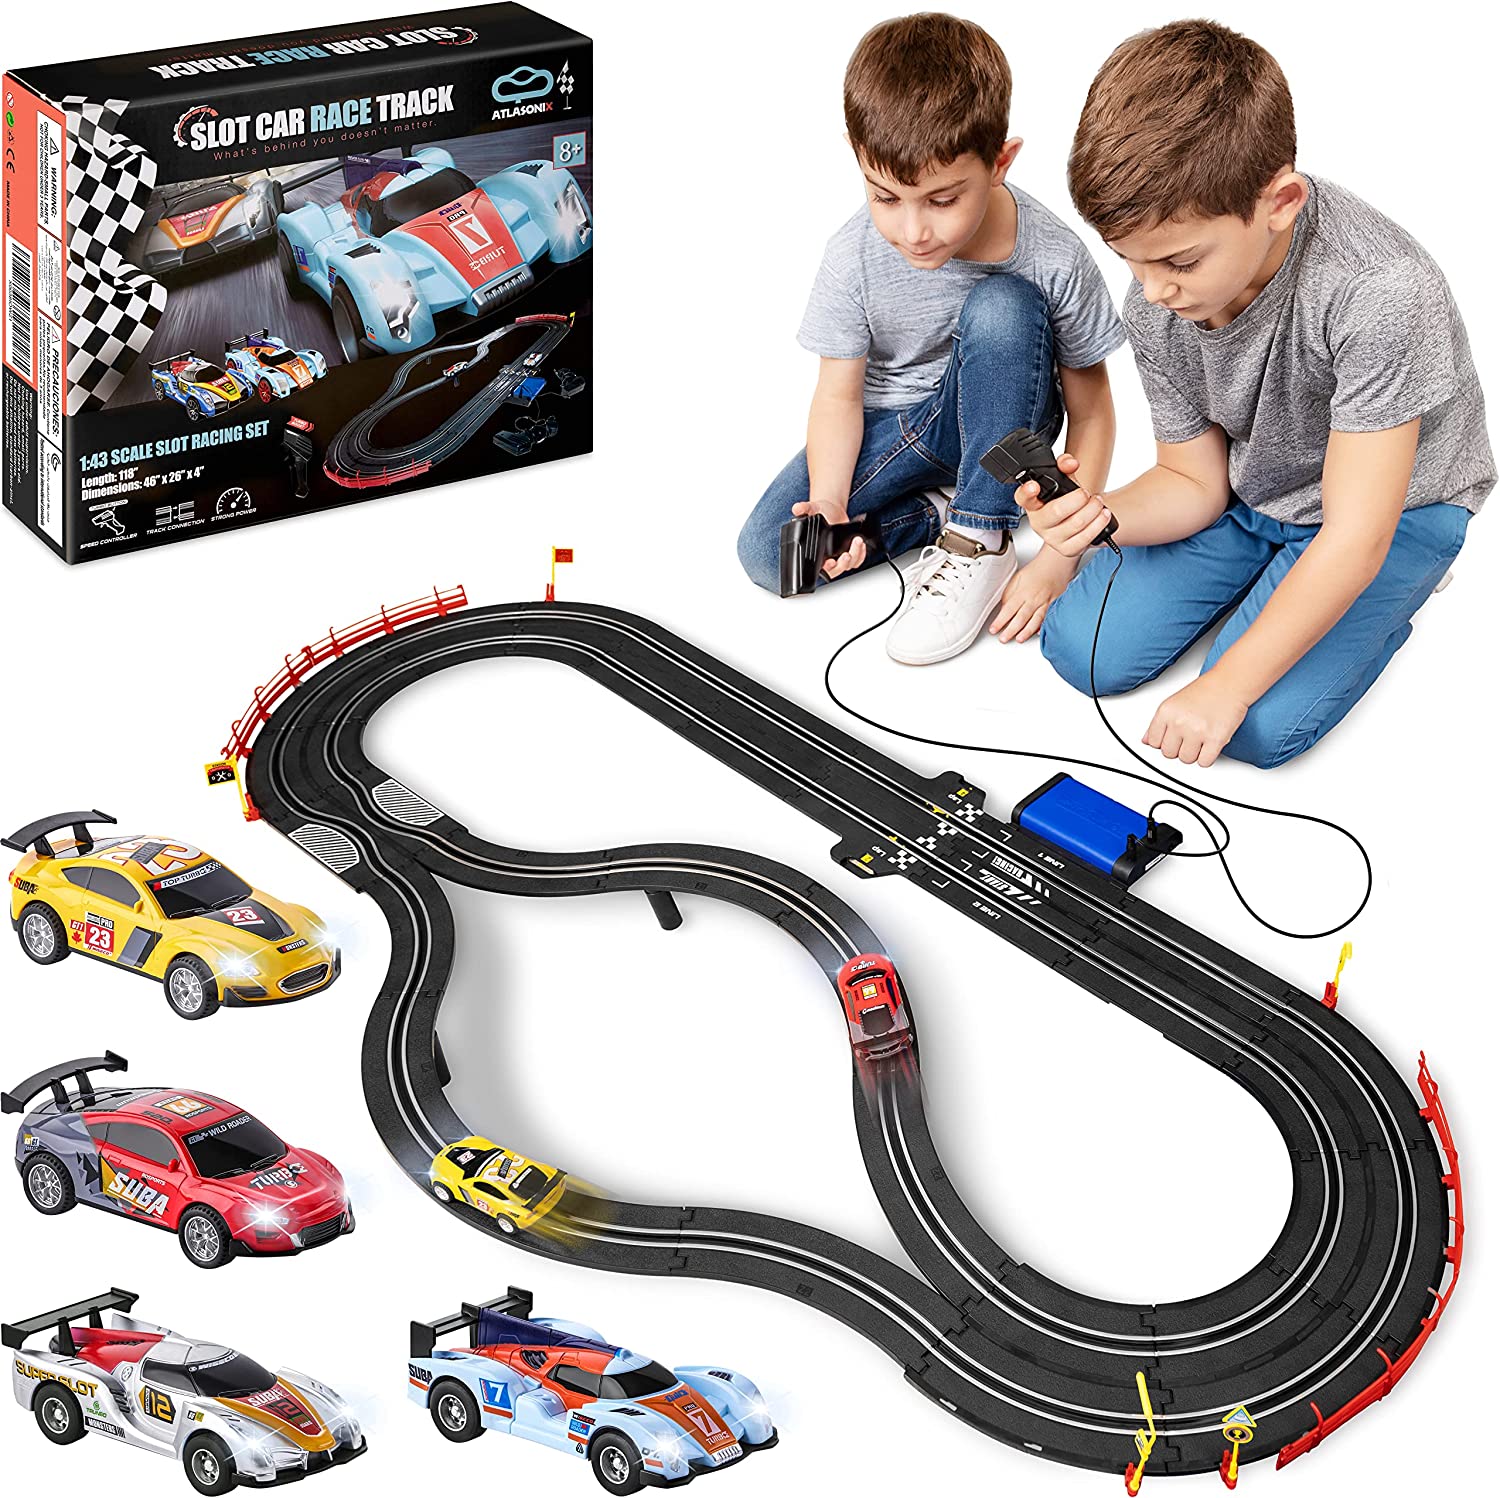 Slot Car Race Track Sets – Atlasonix